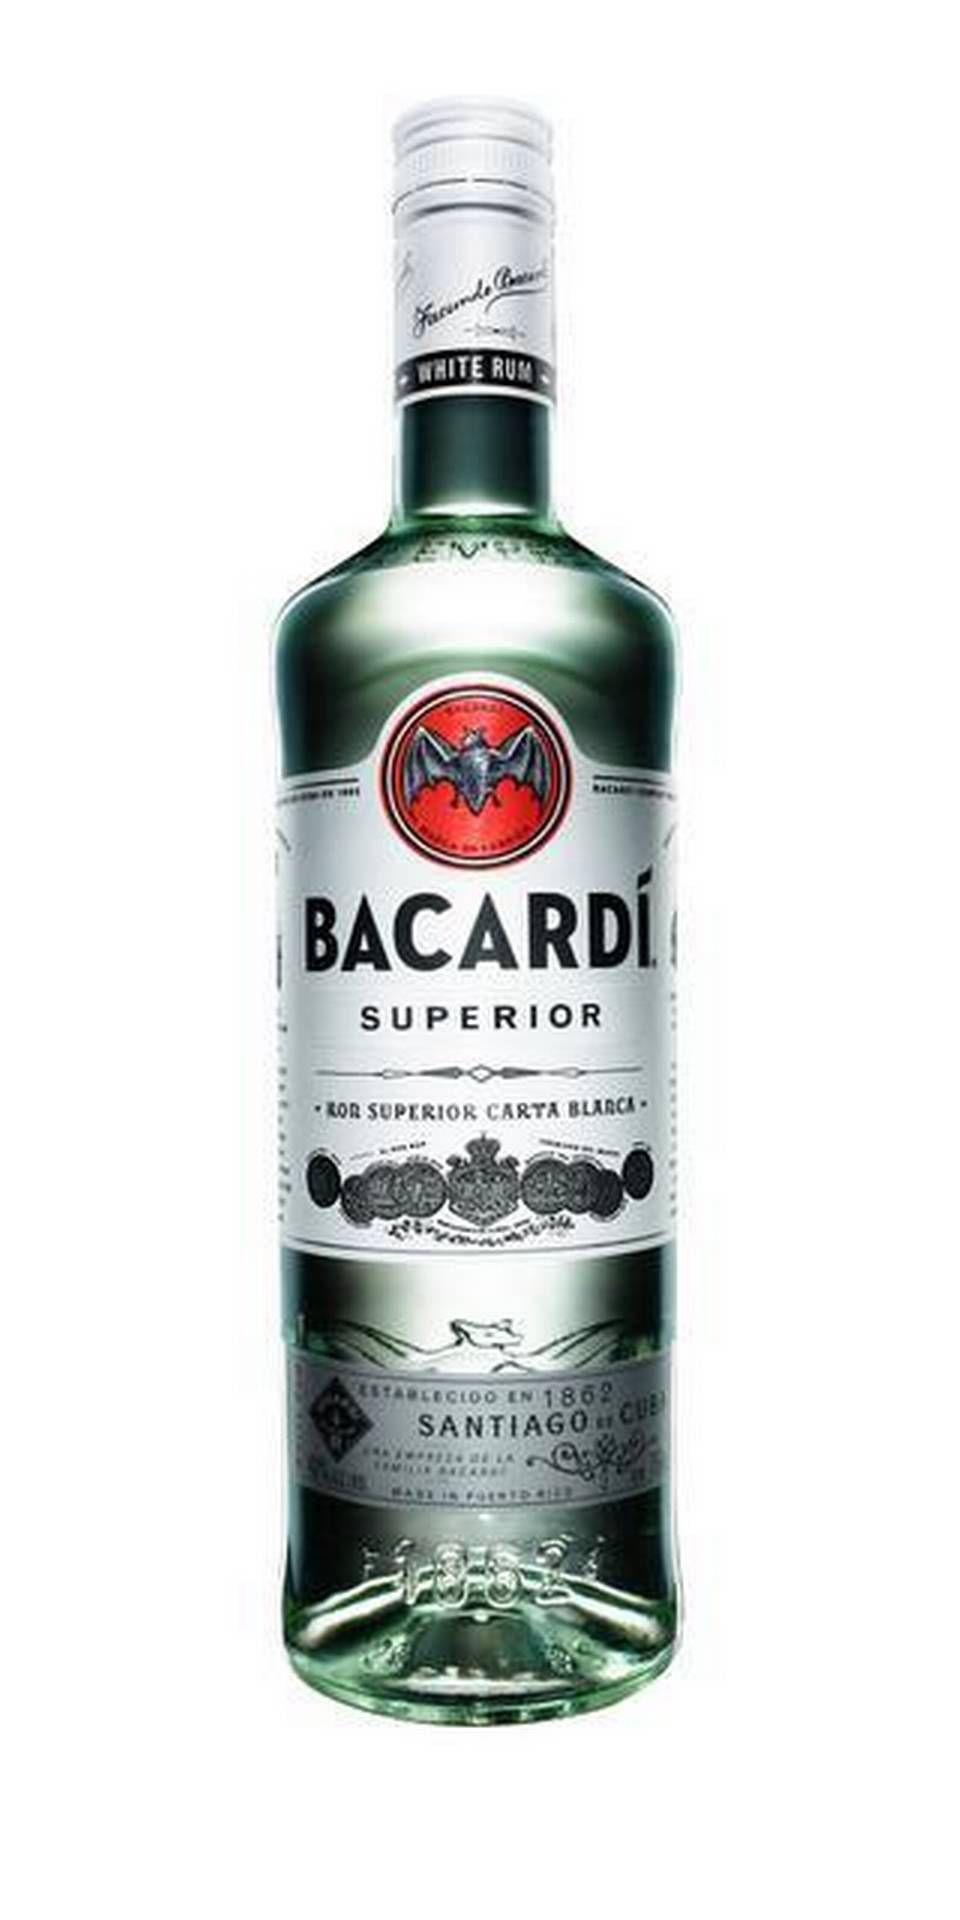 New Bacardi Bottle Logo - Bacardi Rum's packaging design has Art Deco flavor